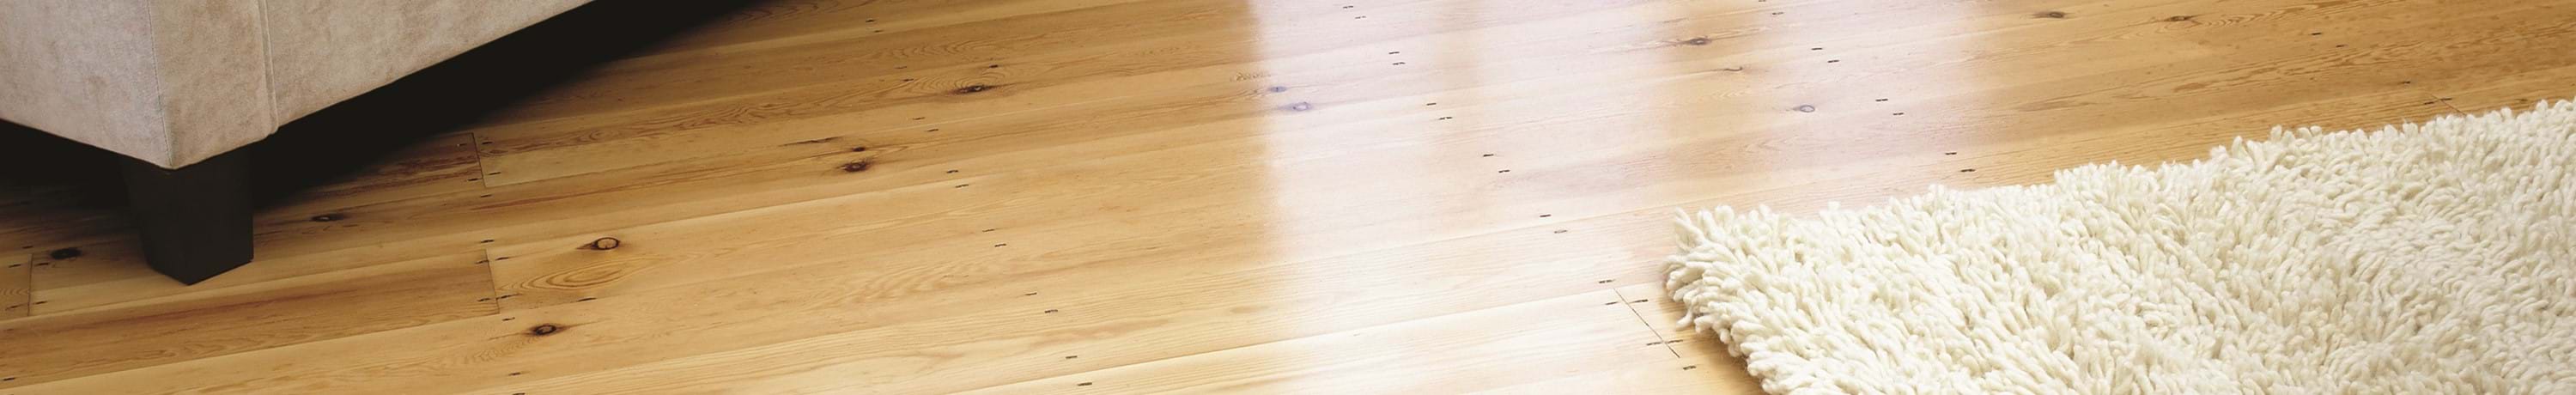 wood floor cleaning category.jpg